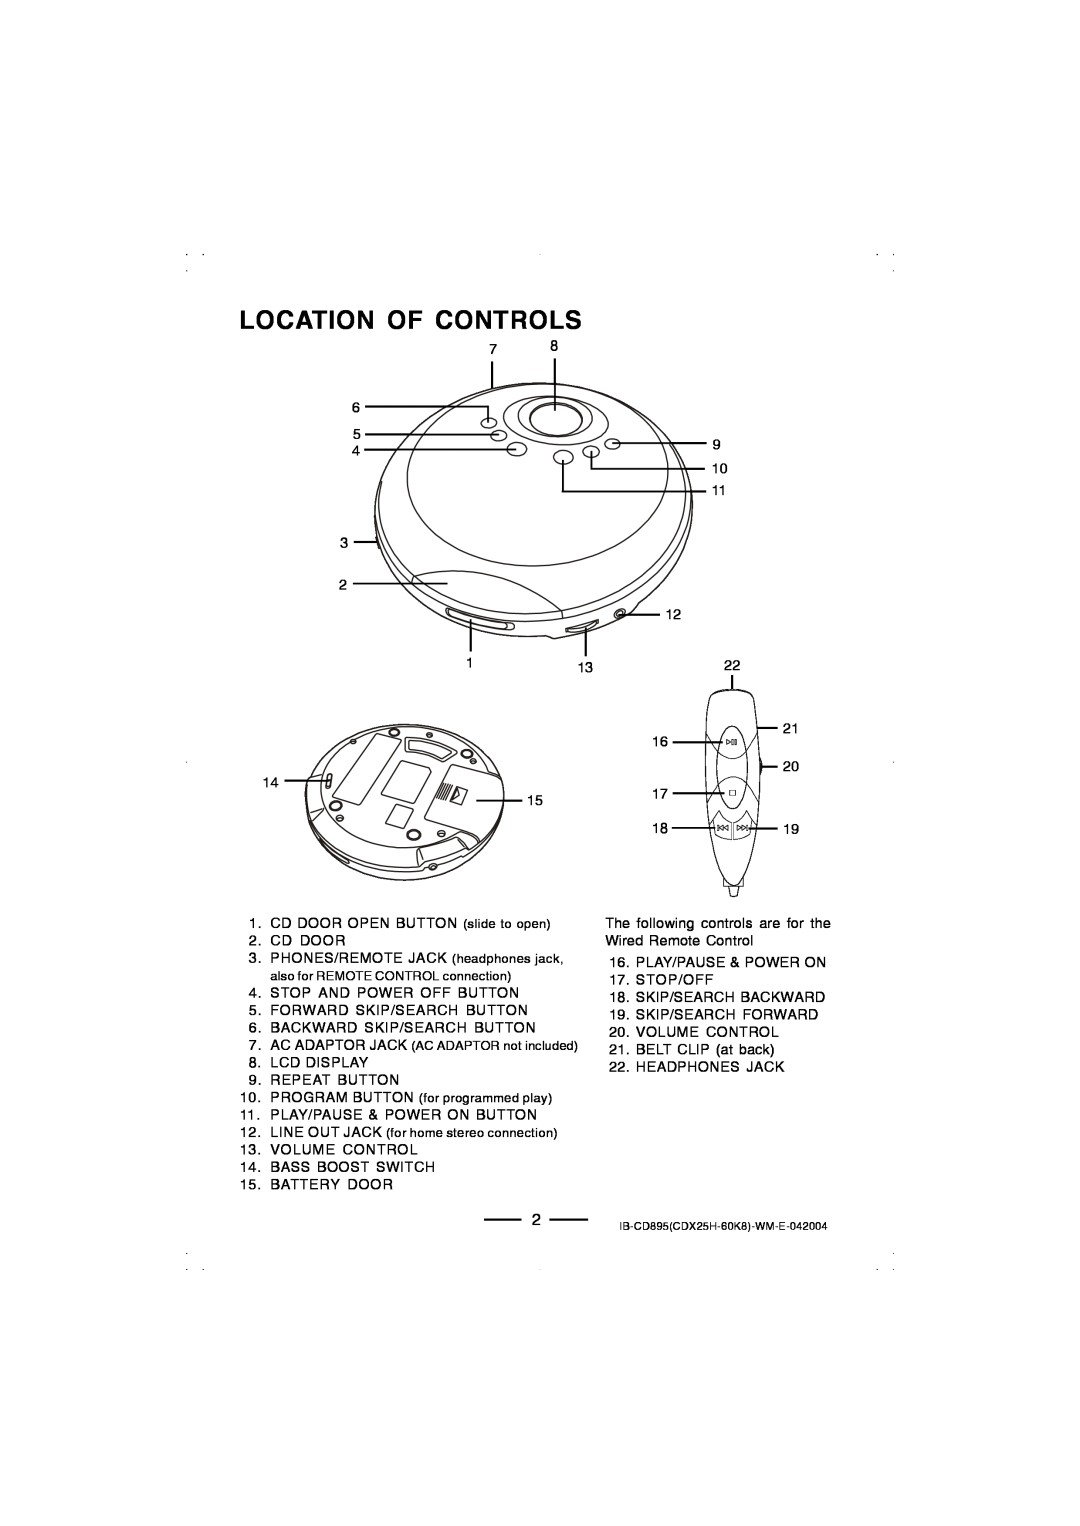 Lenoxx Electronics CD-895 manual Location Of Controls 